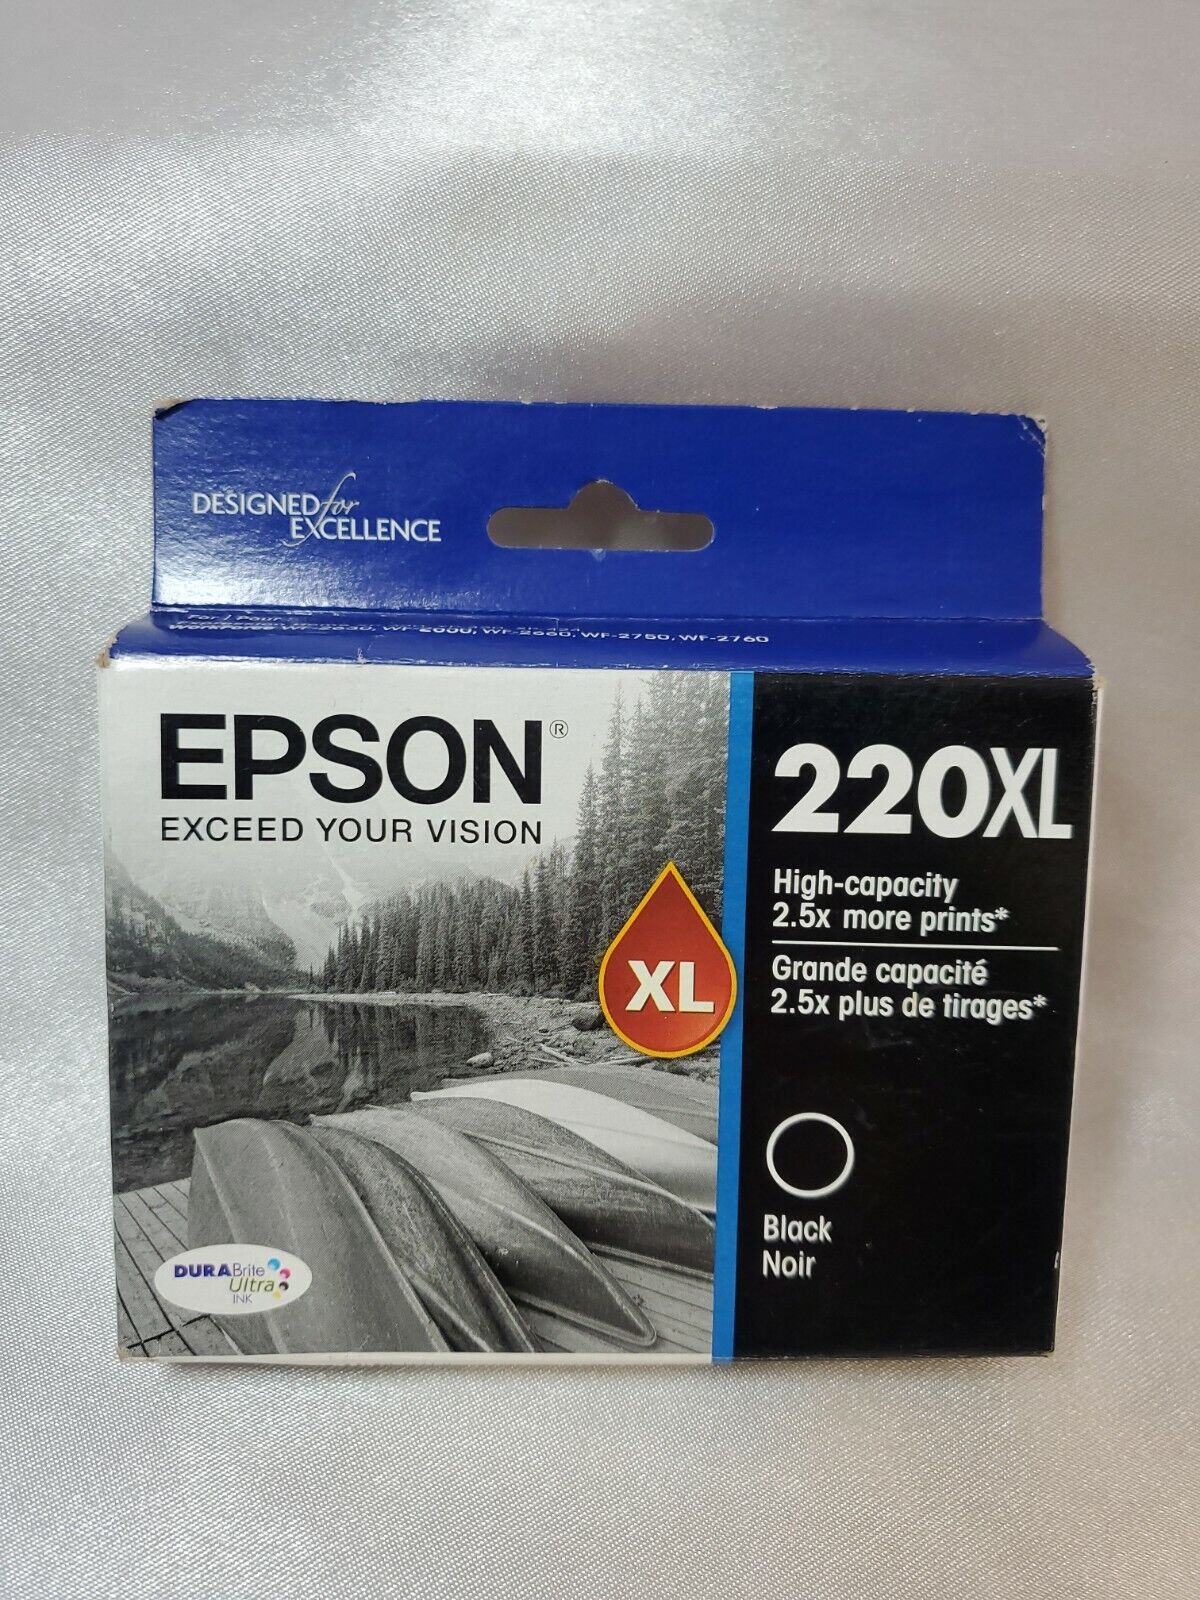 Epson 220XL Black Dura Brite Ultra Ink Single Cartridge in Box *Best By 8/2021*